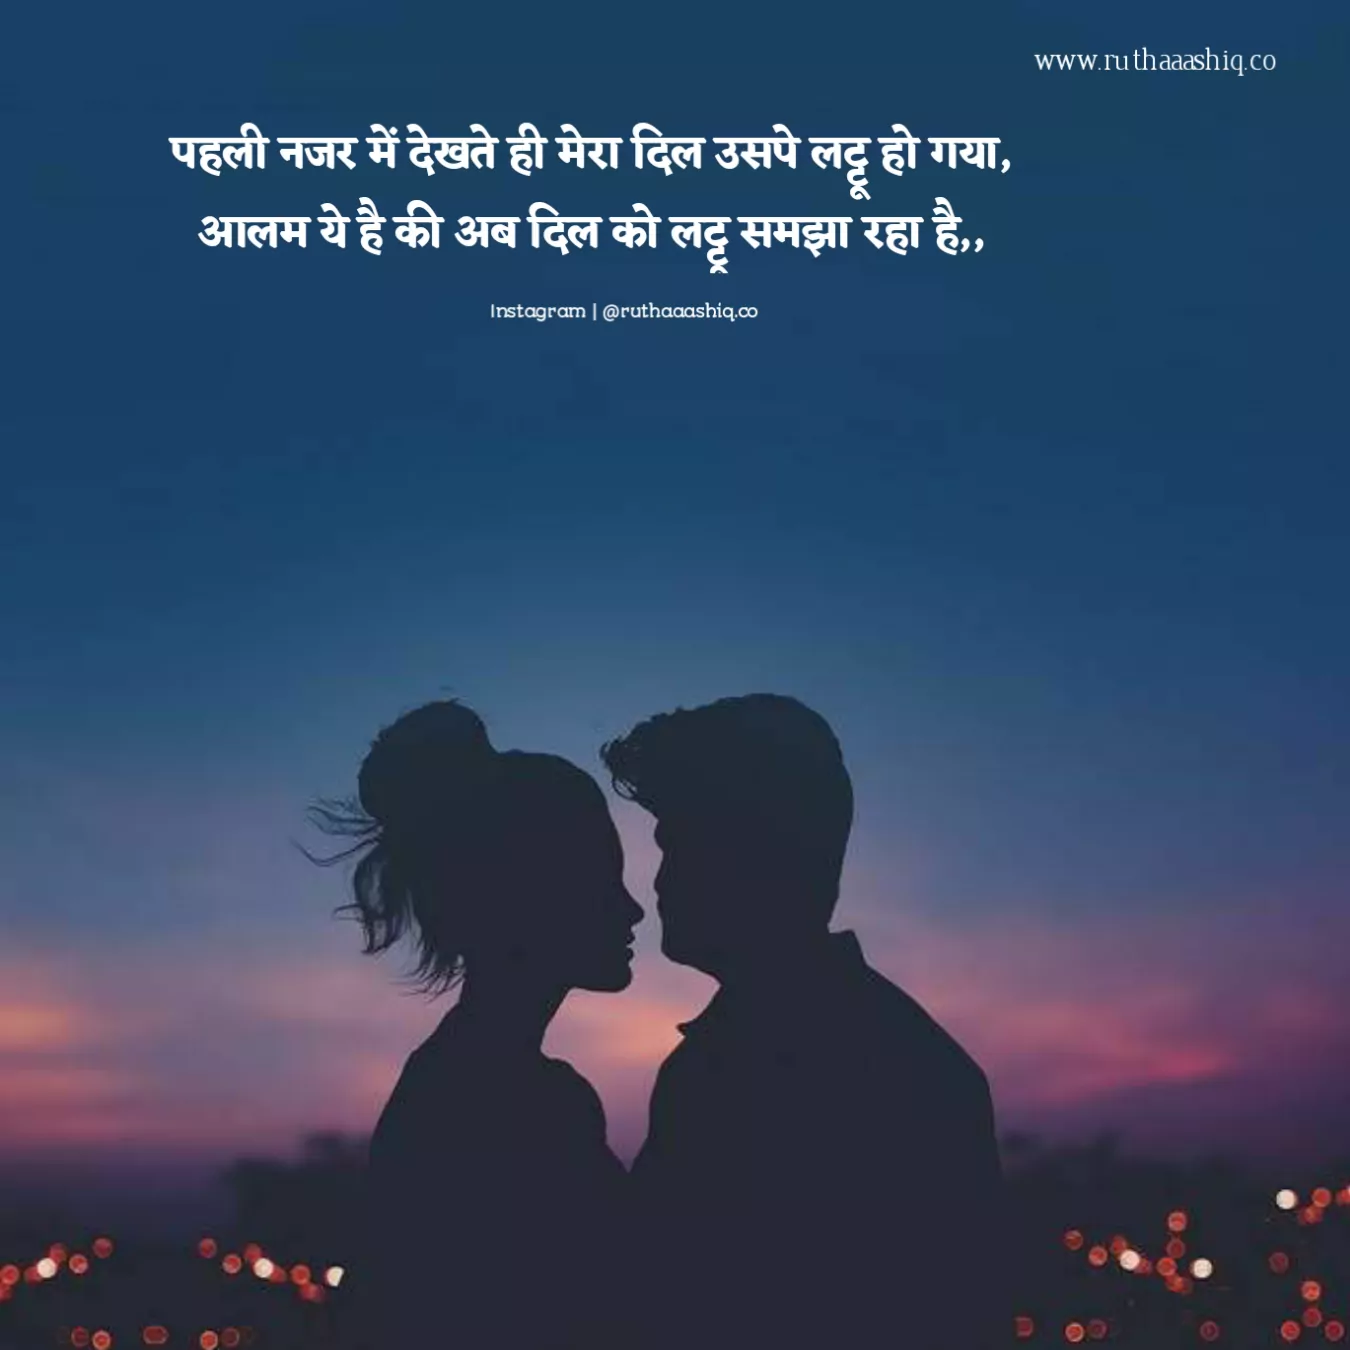 Shayari On Love In Hindi With Images